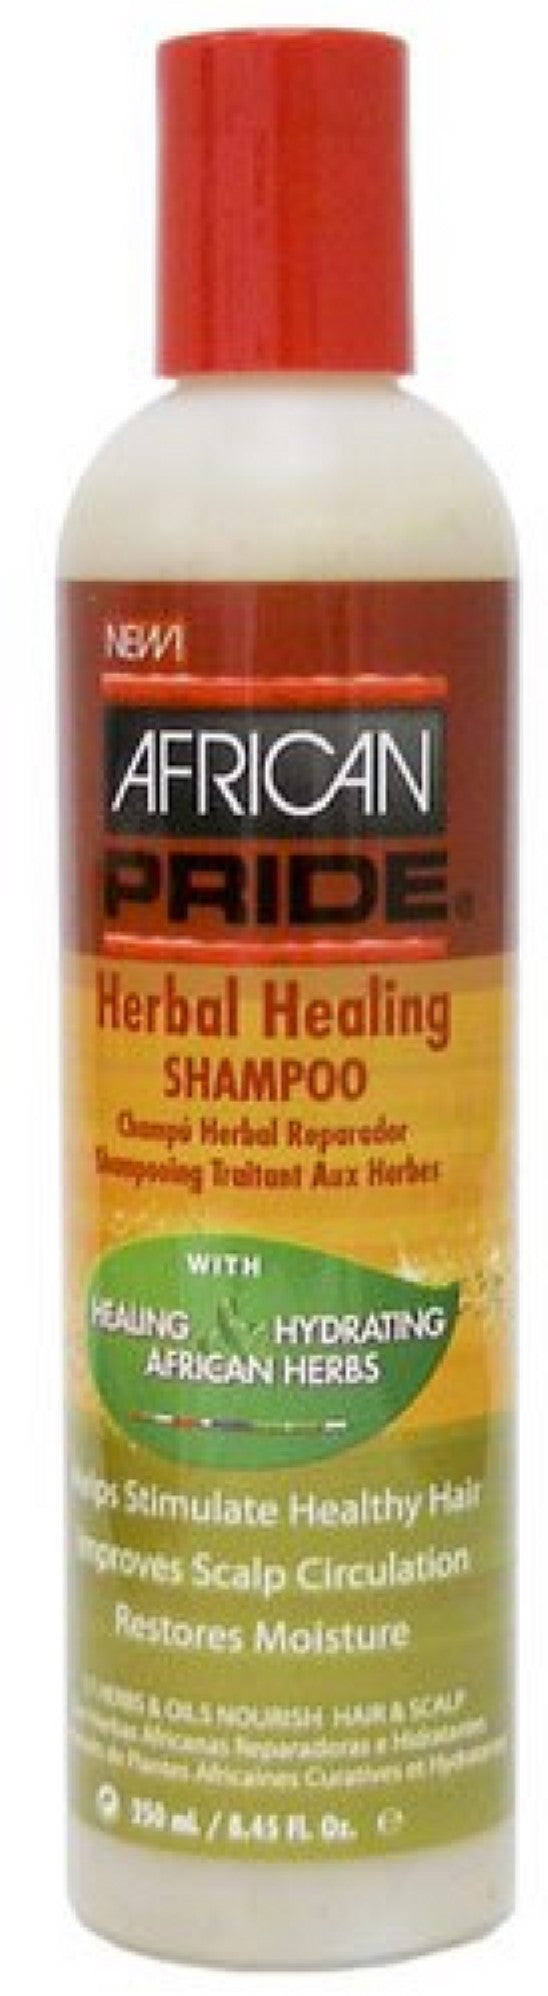 African Pride- Herbal Healing Shampoo 8.45oz